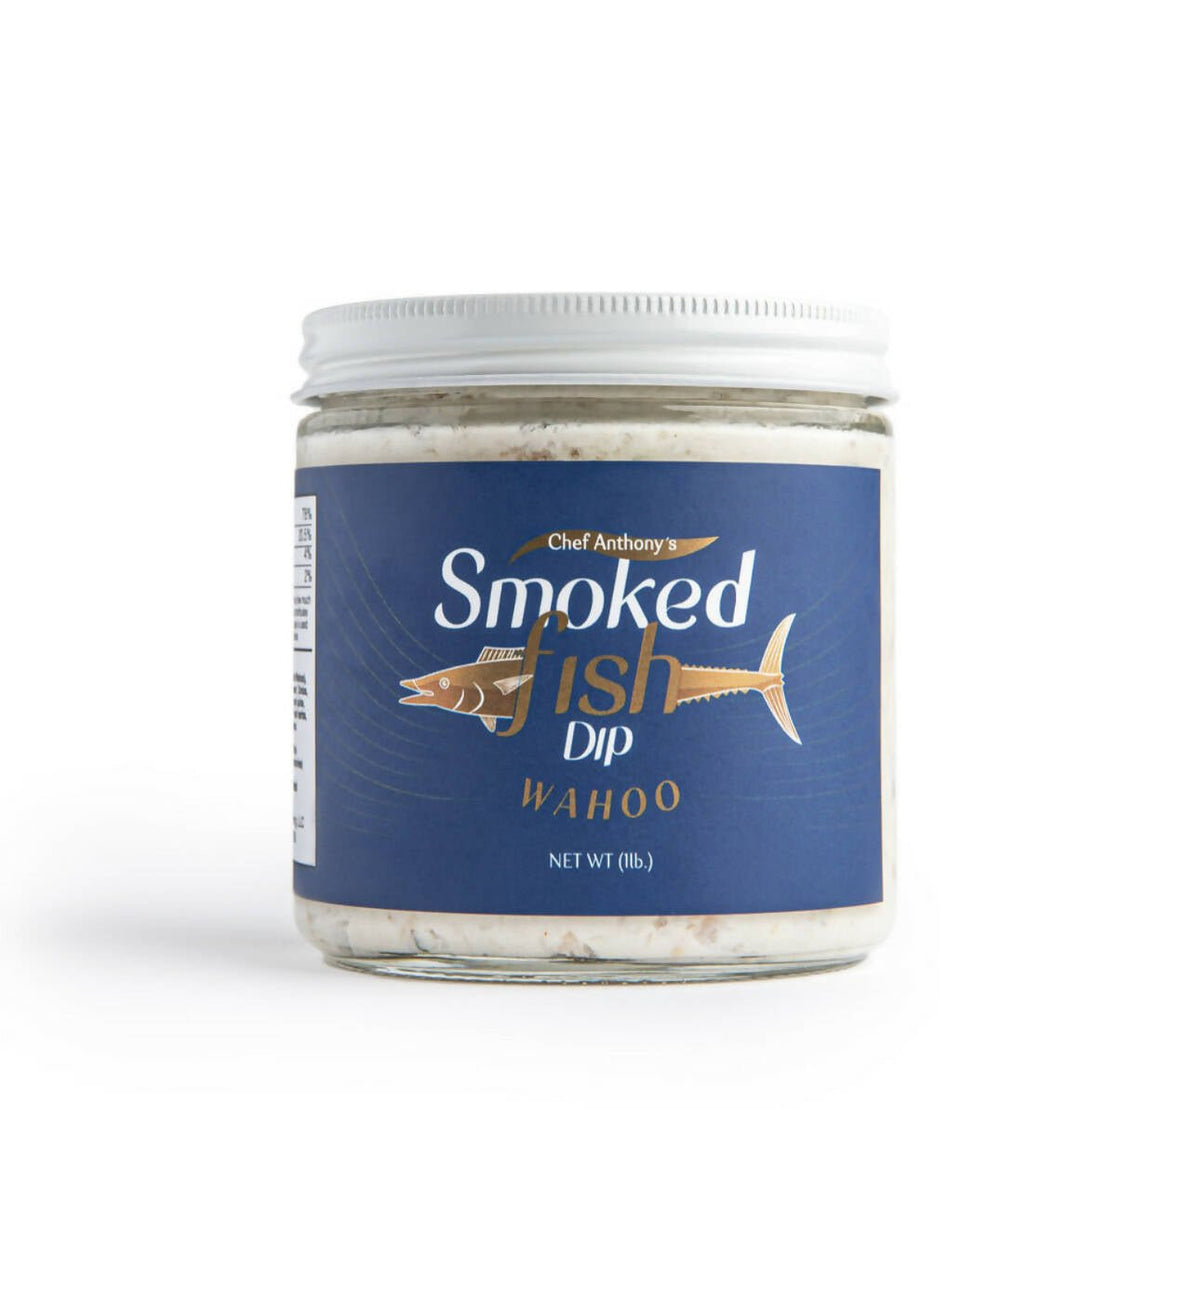 Chef Anthony’s Smoked Fish Dip Jars - 2 jars x 1 LB by Farm2Me